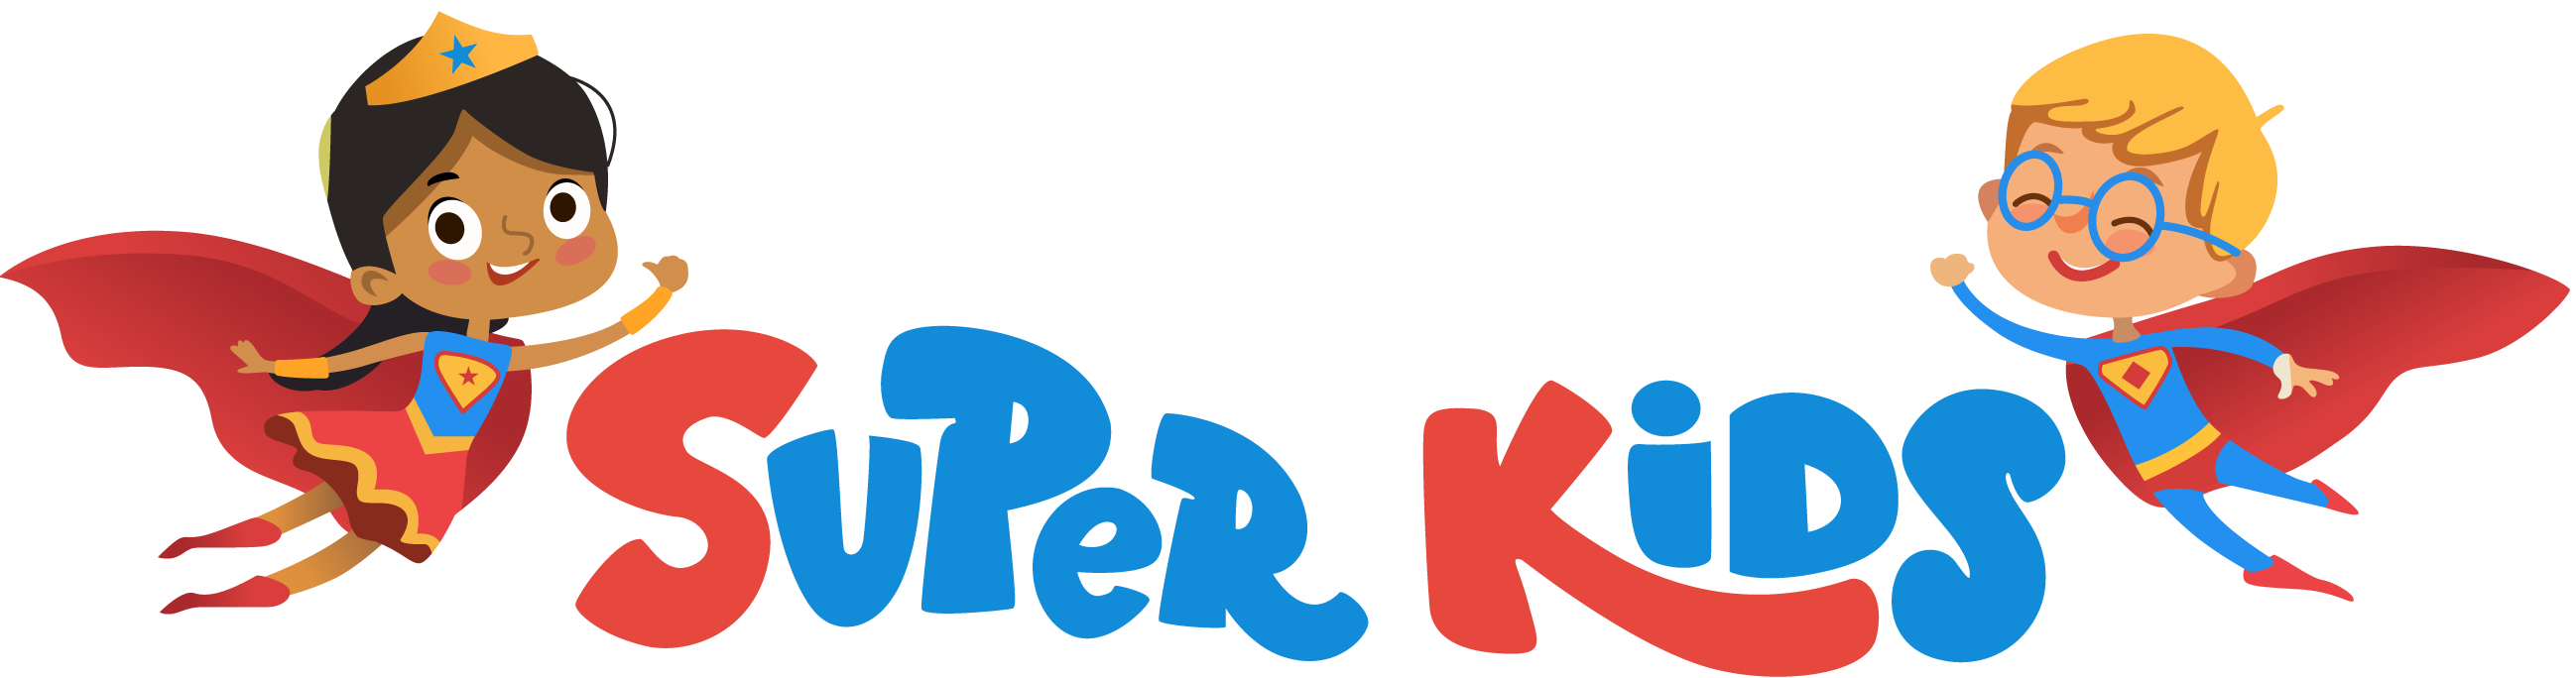 tx super kids logo